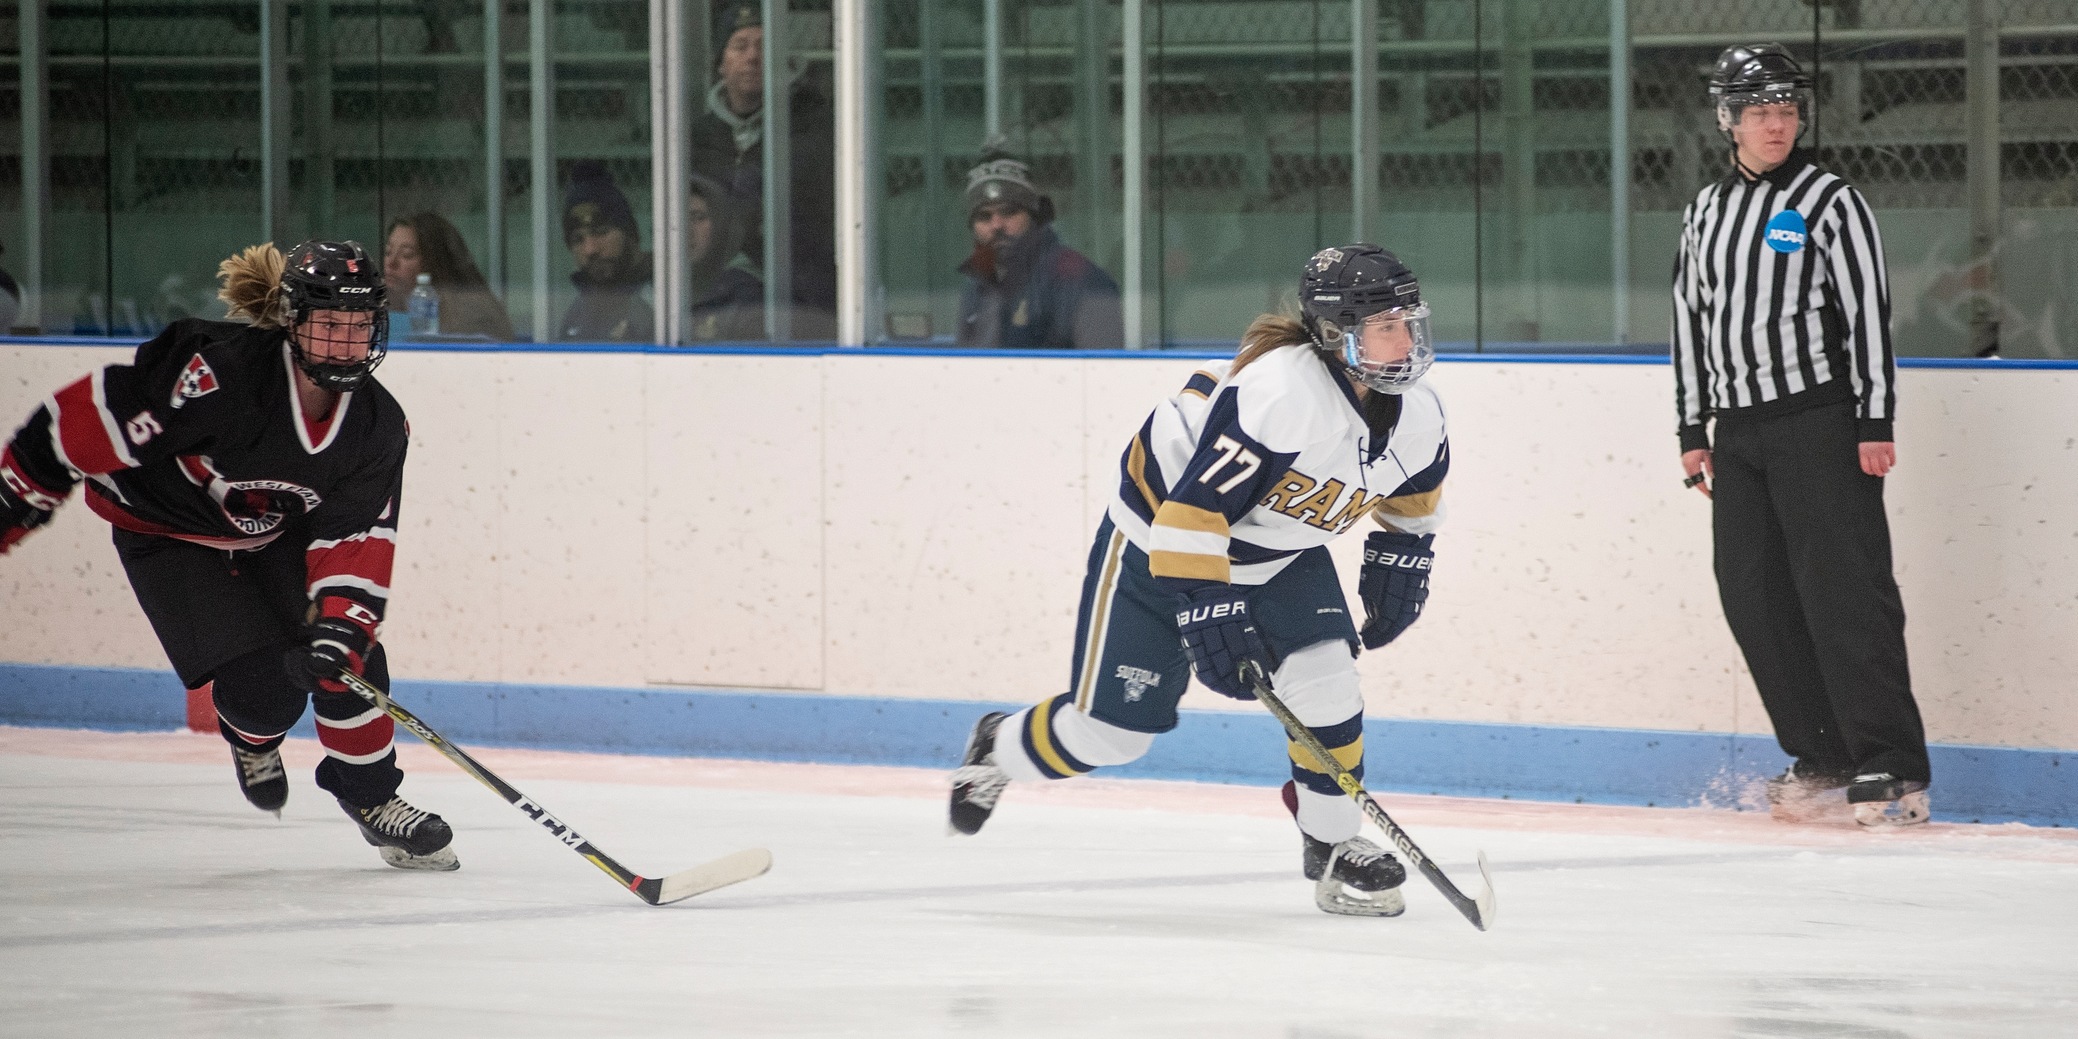 Ricardo Boosts Women’s Hockey Past Southern Maine, 3-2